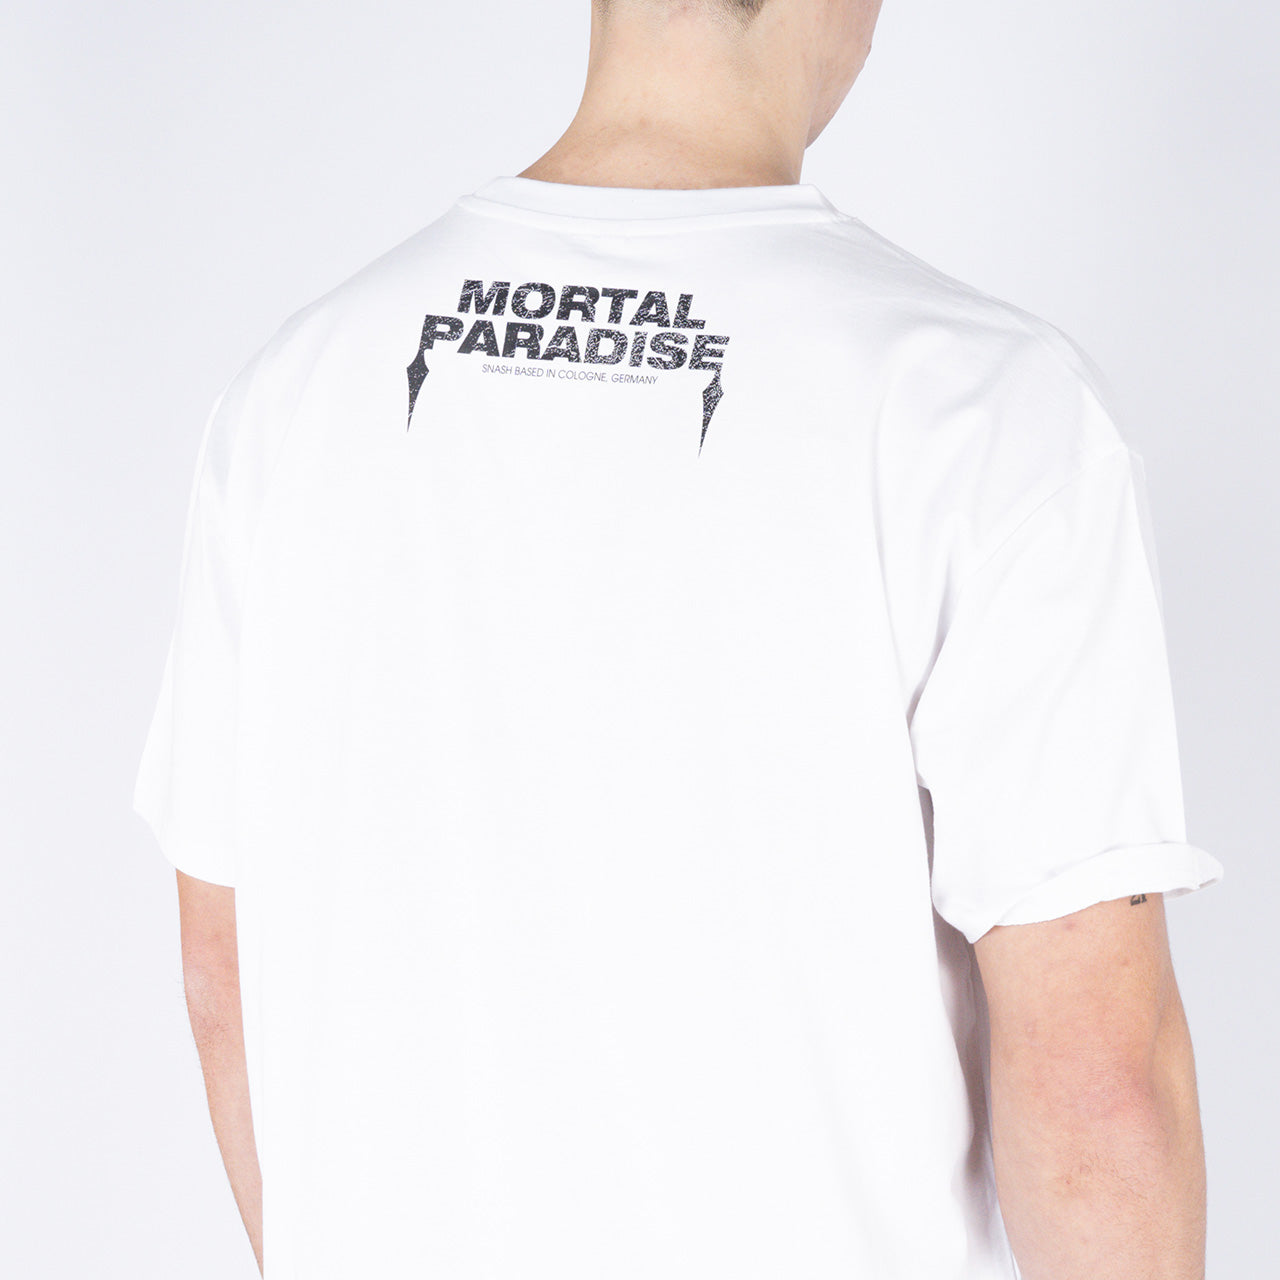 Snash - Mortal Paradise Shirt